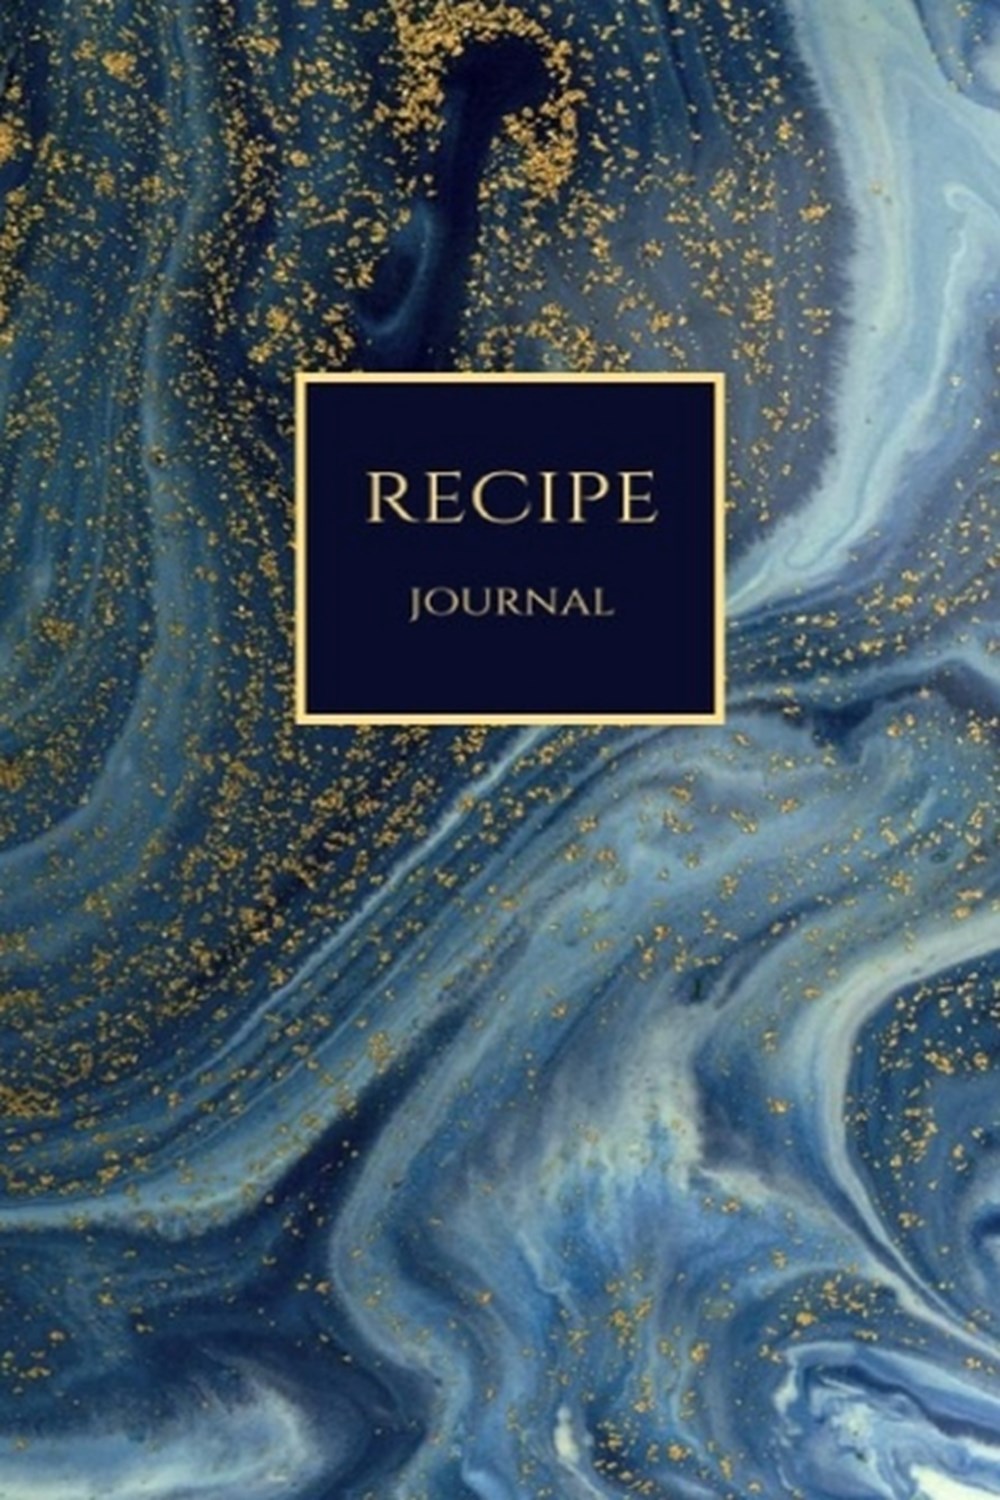 Recipe Journal Dark Blue Gold Swirls Blank Recipe Journal Book to Write In Favorite Recipes and Note